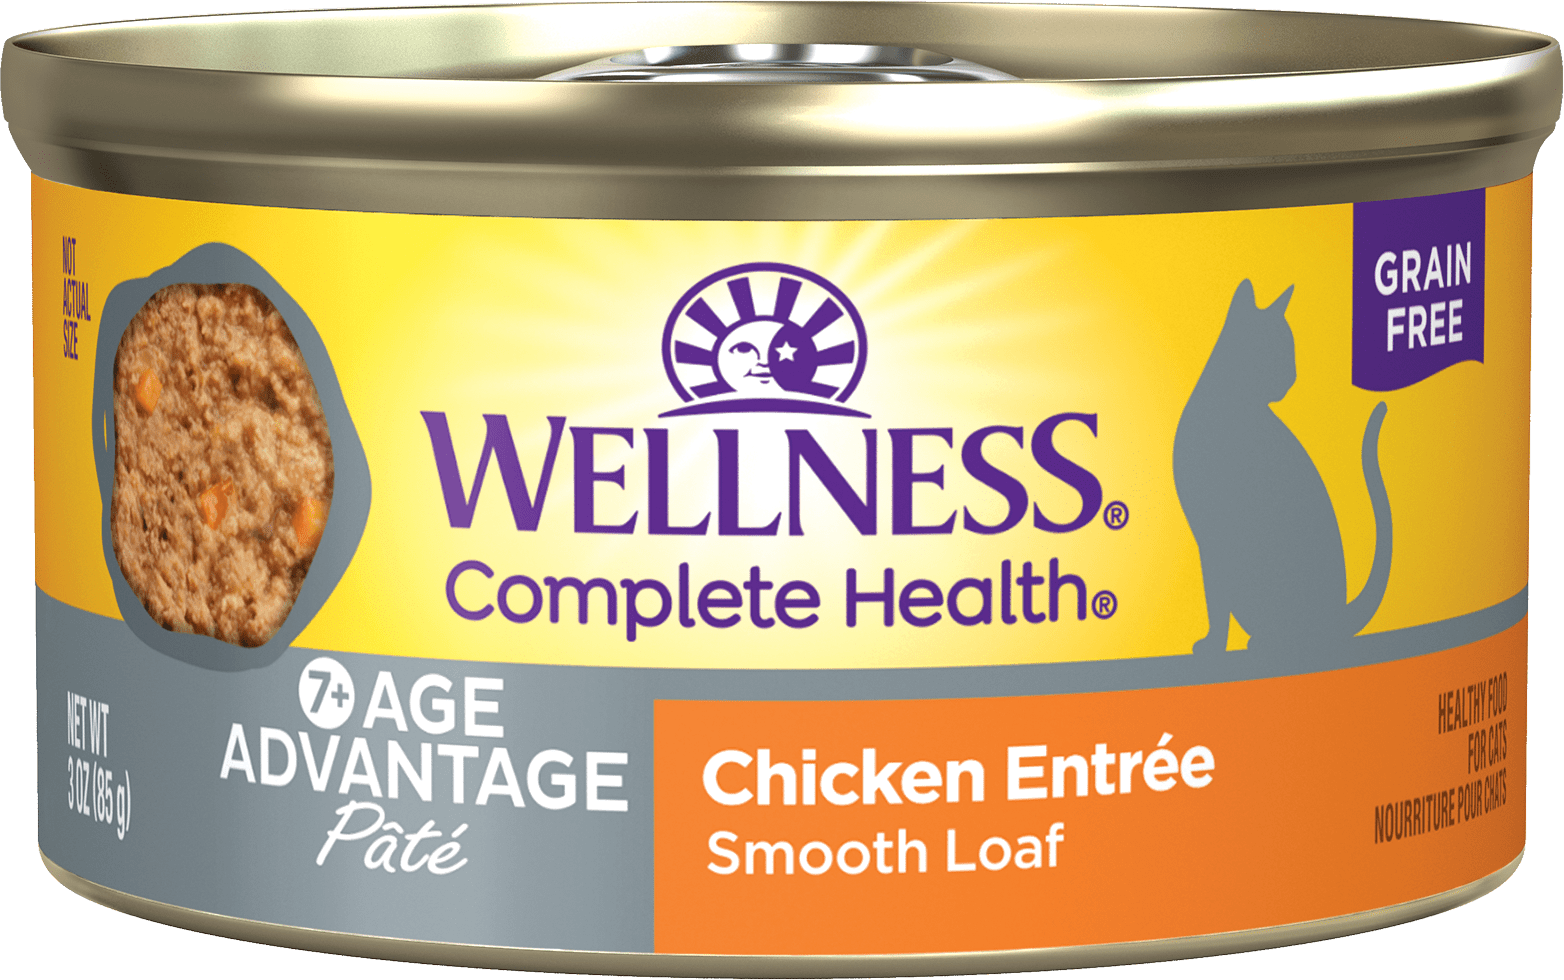 Wellness Complete Health Age Advantage Patée Age Advantage: Chicken